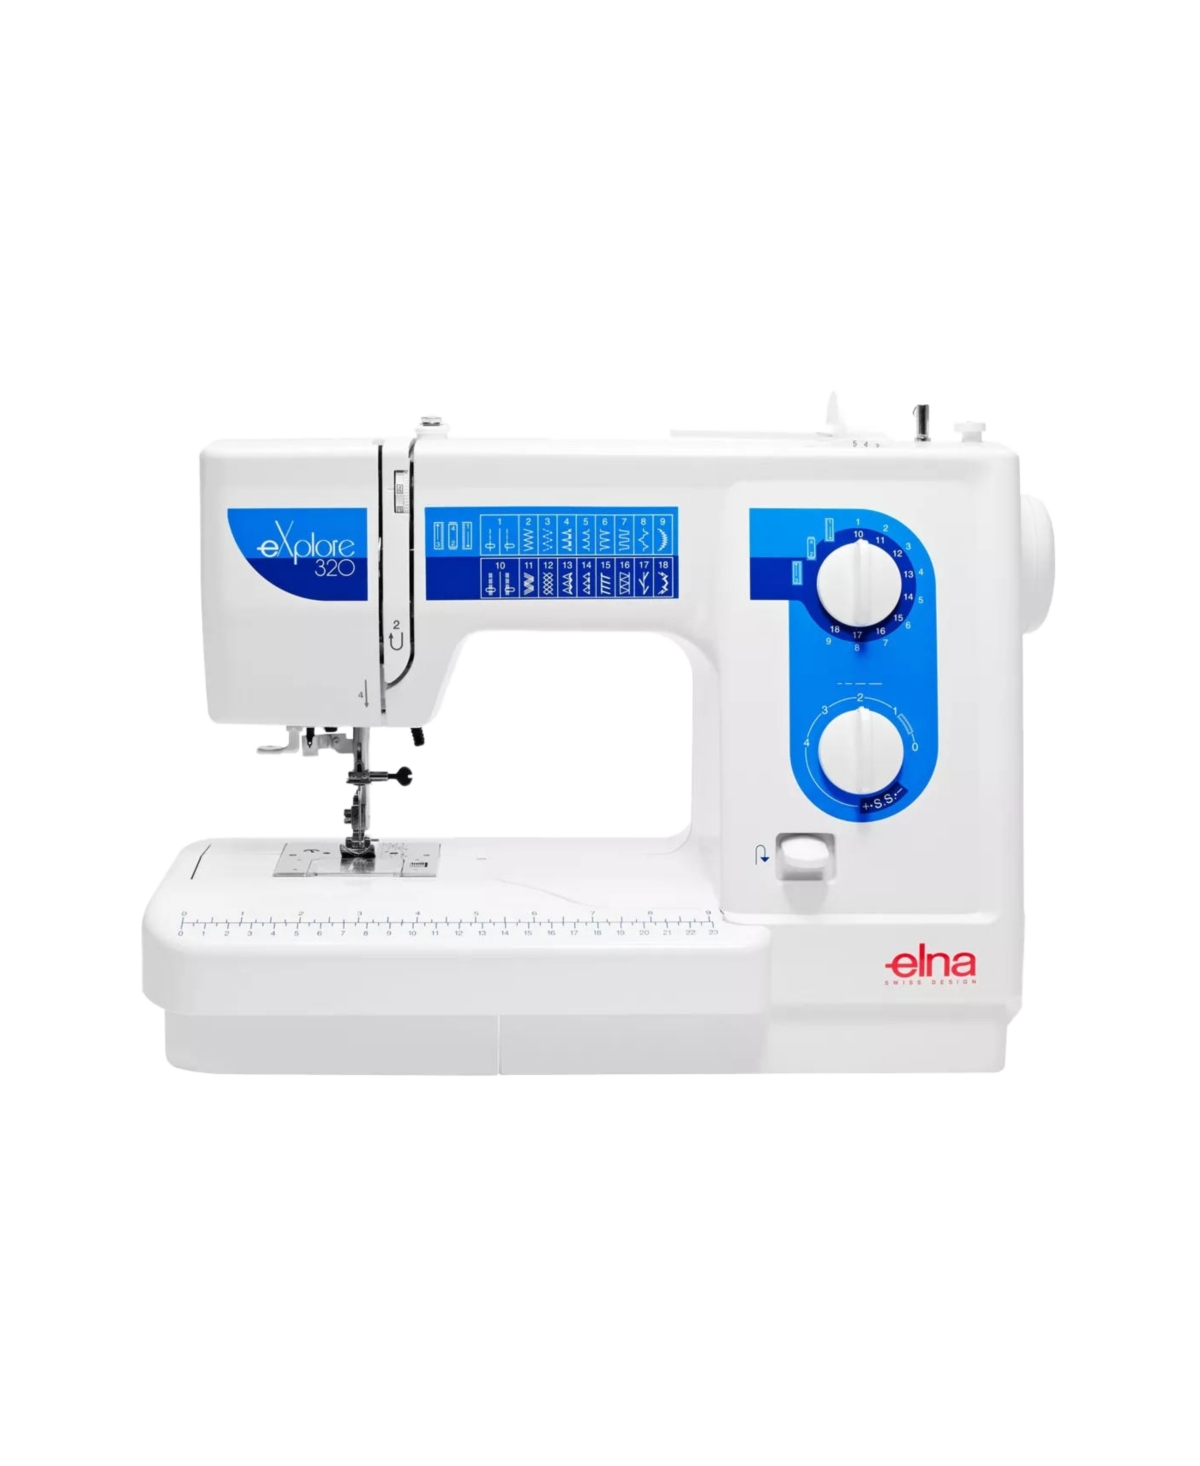 eXplore 320 Sewing Machine - White